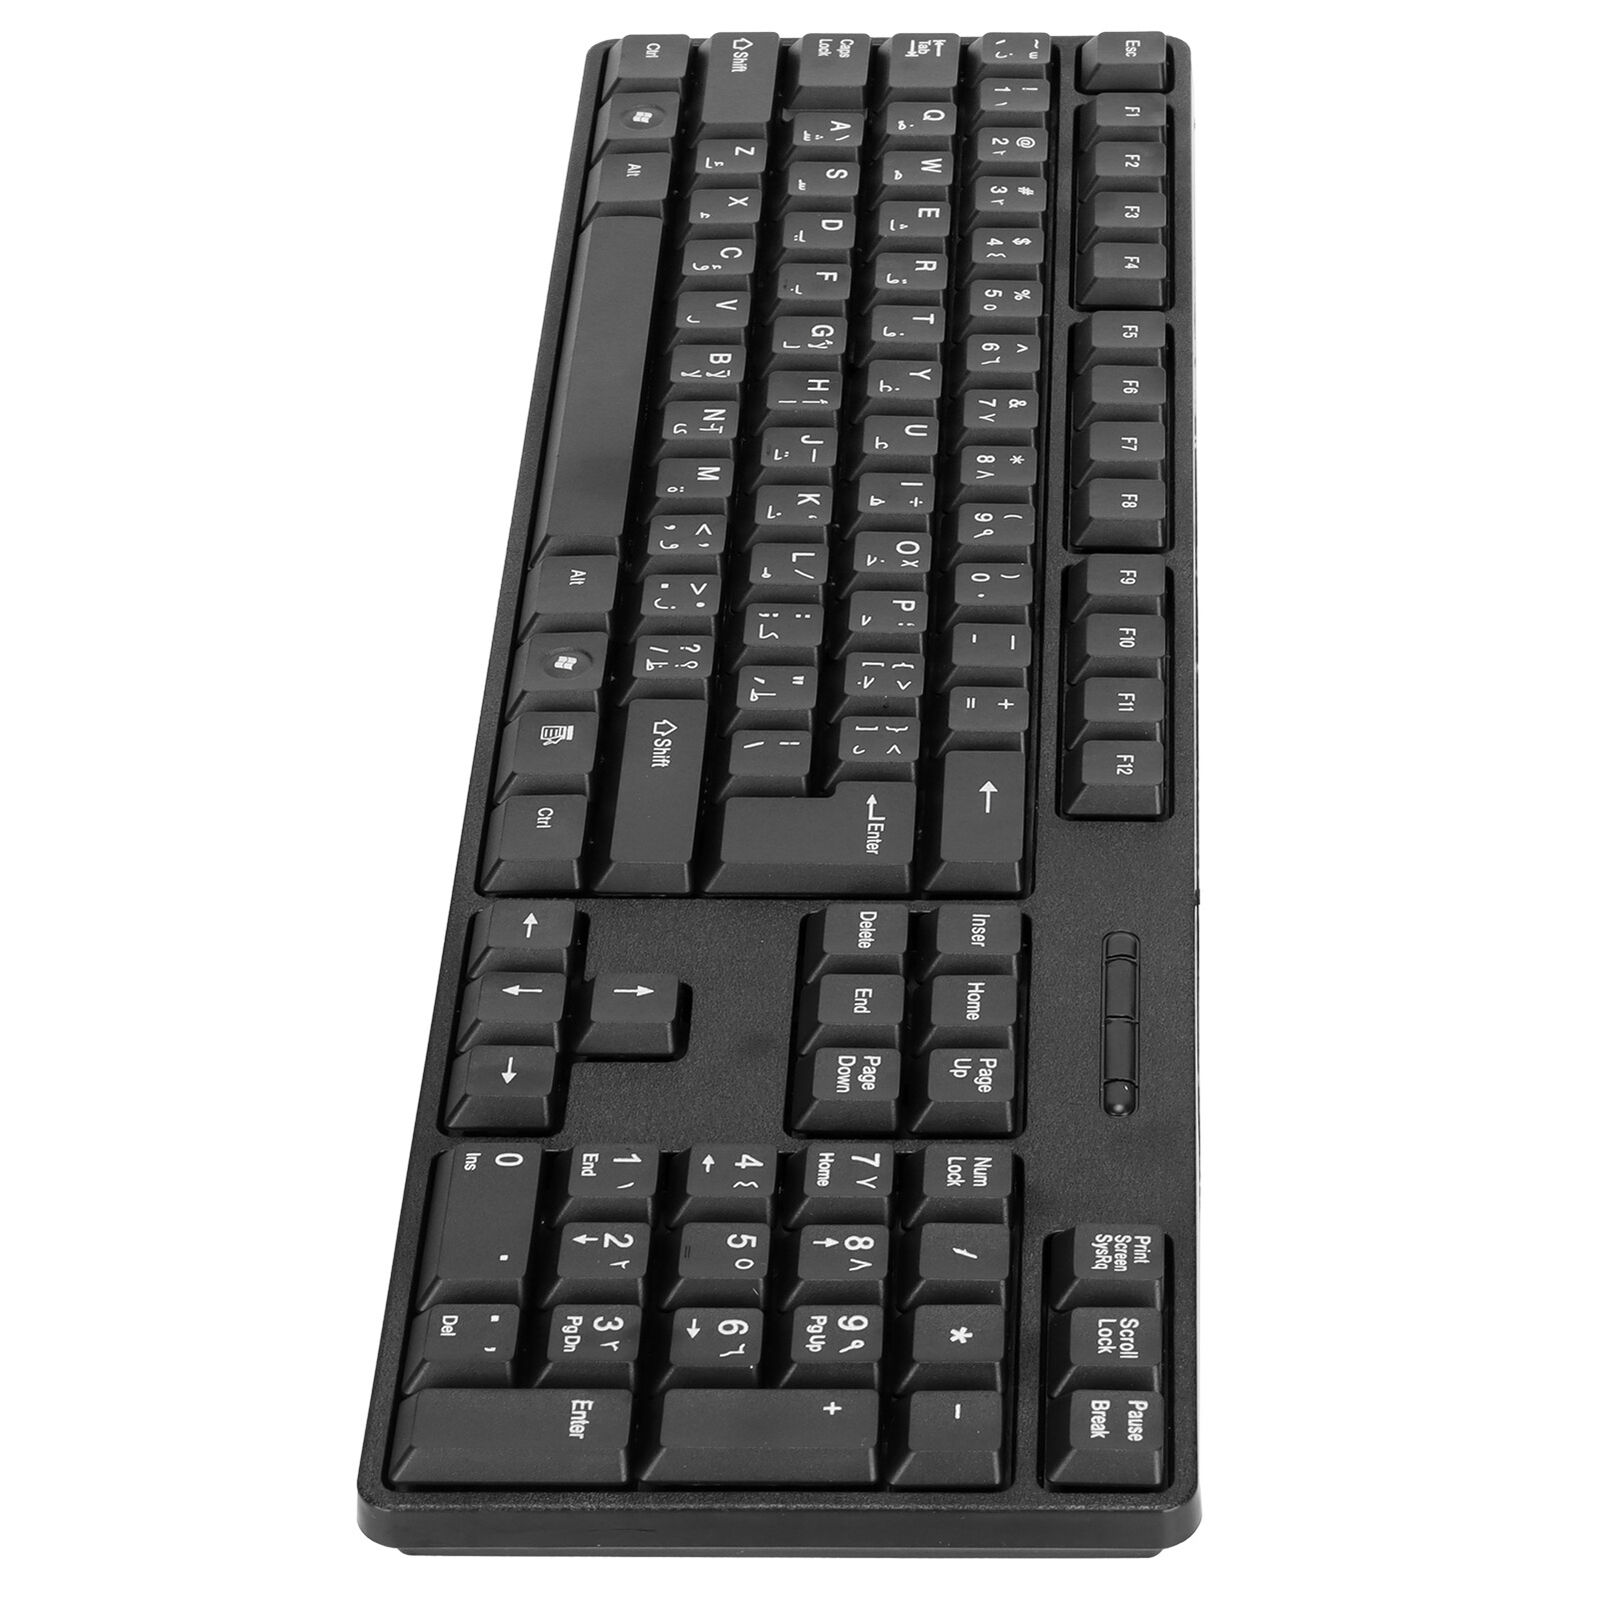 Bilingual USB Wired Arabic English Keyboard Black For Computer Laptop Desktop